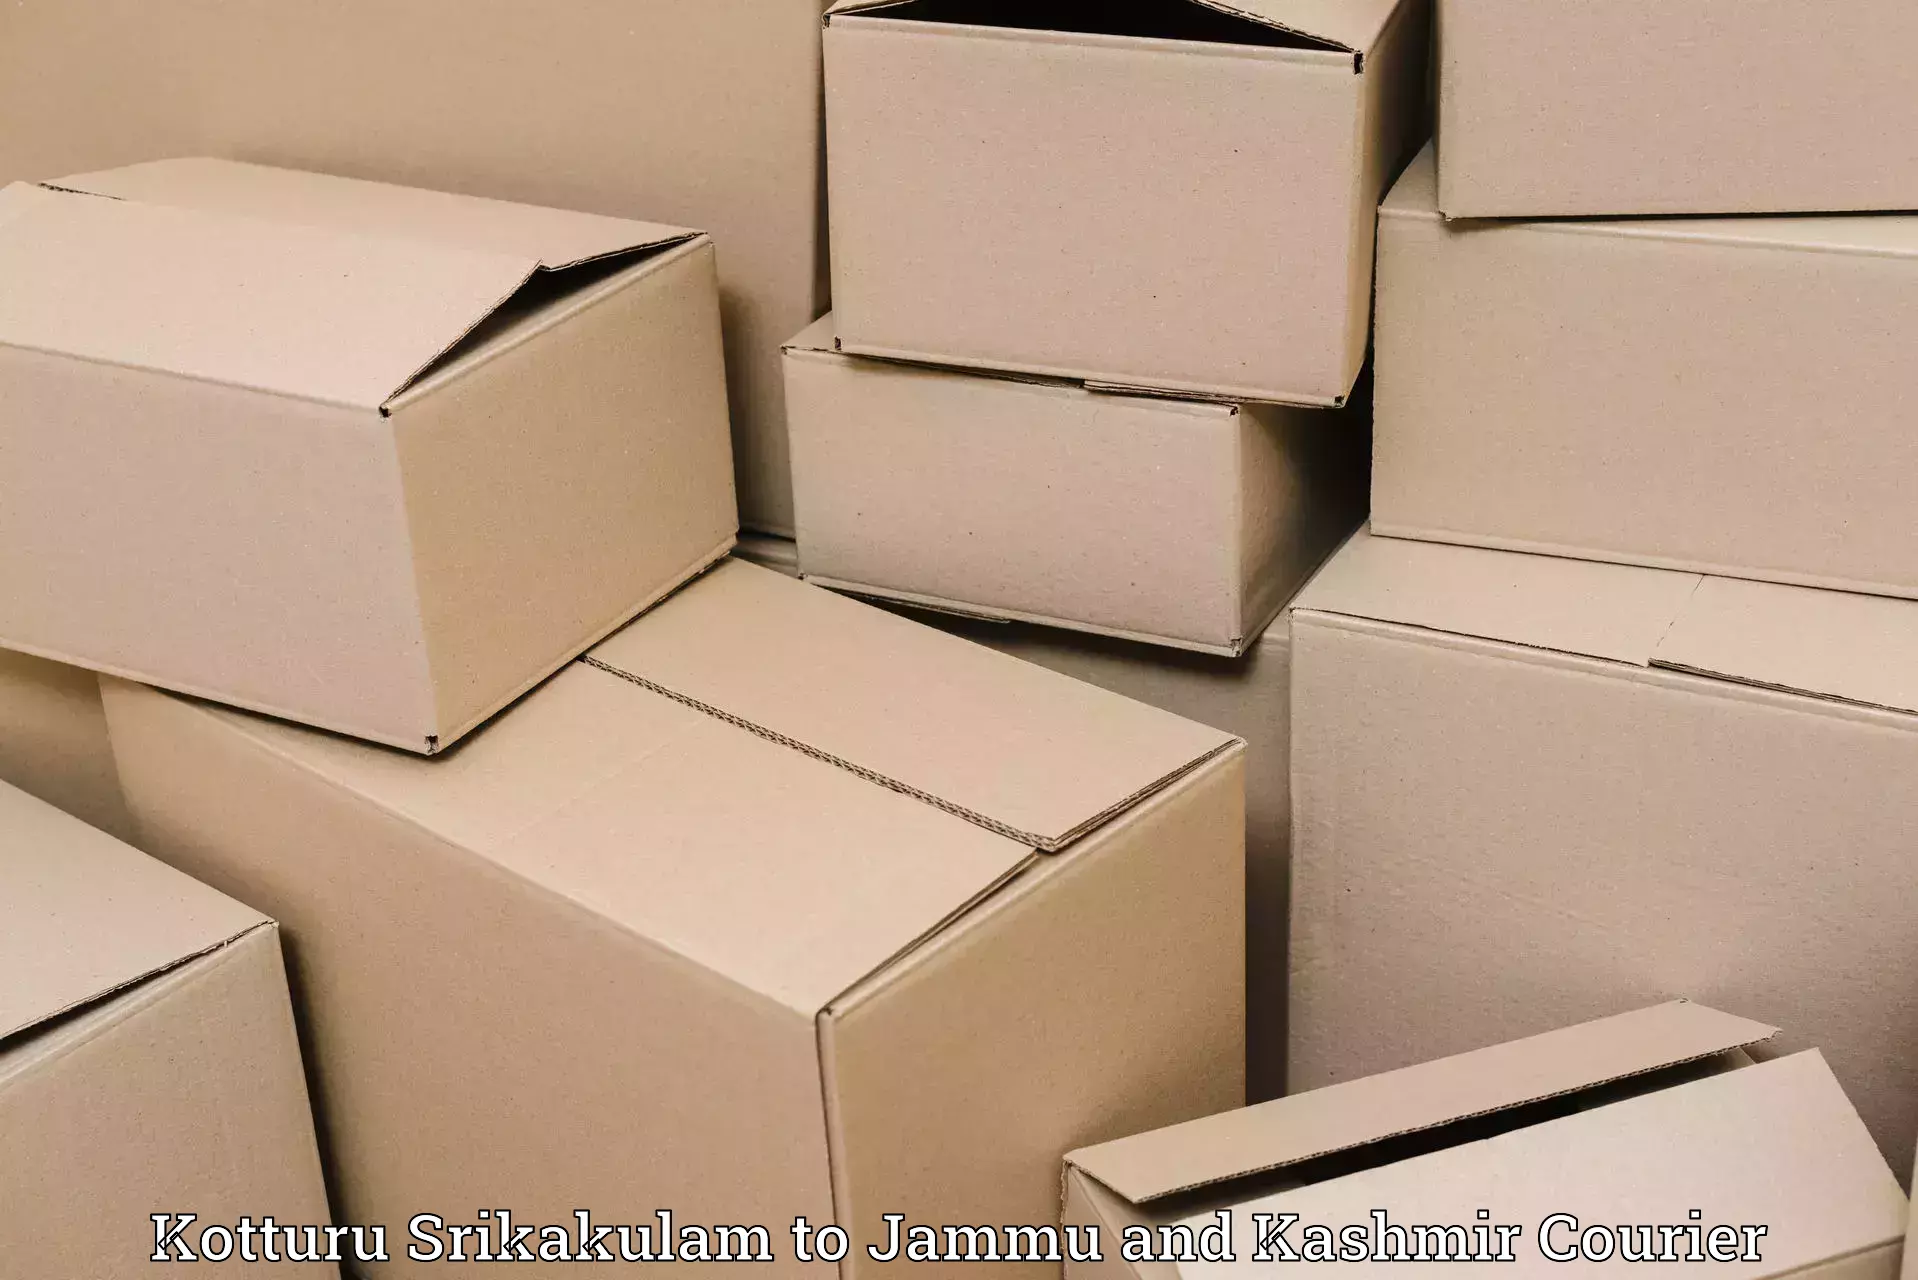 Express delivery capabilities Kotturu Srikakulam to University of Jammu